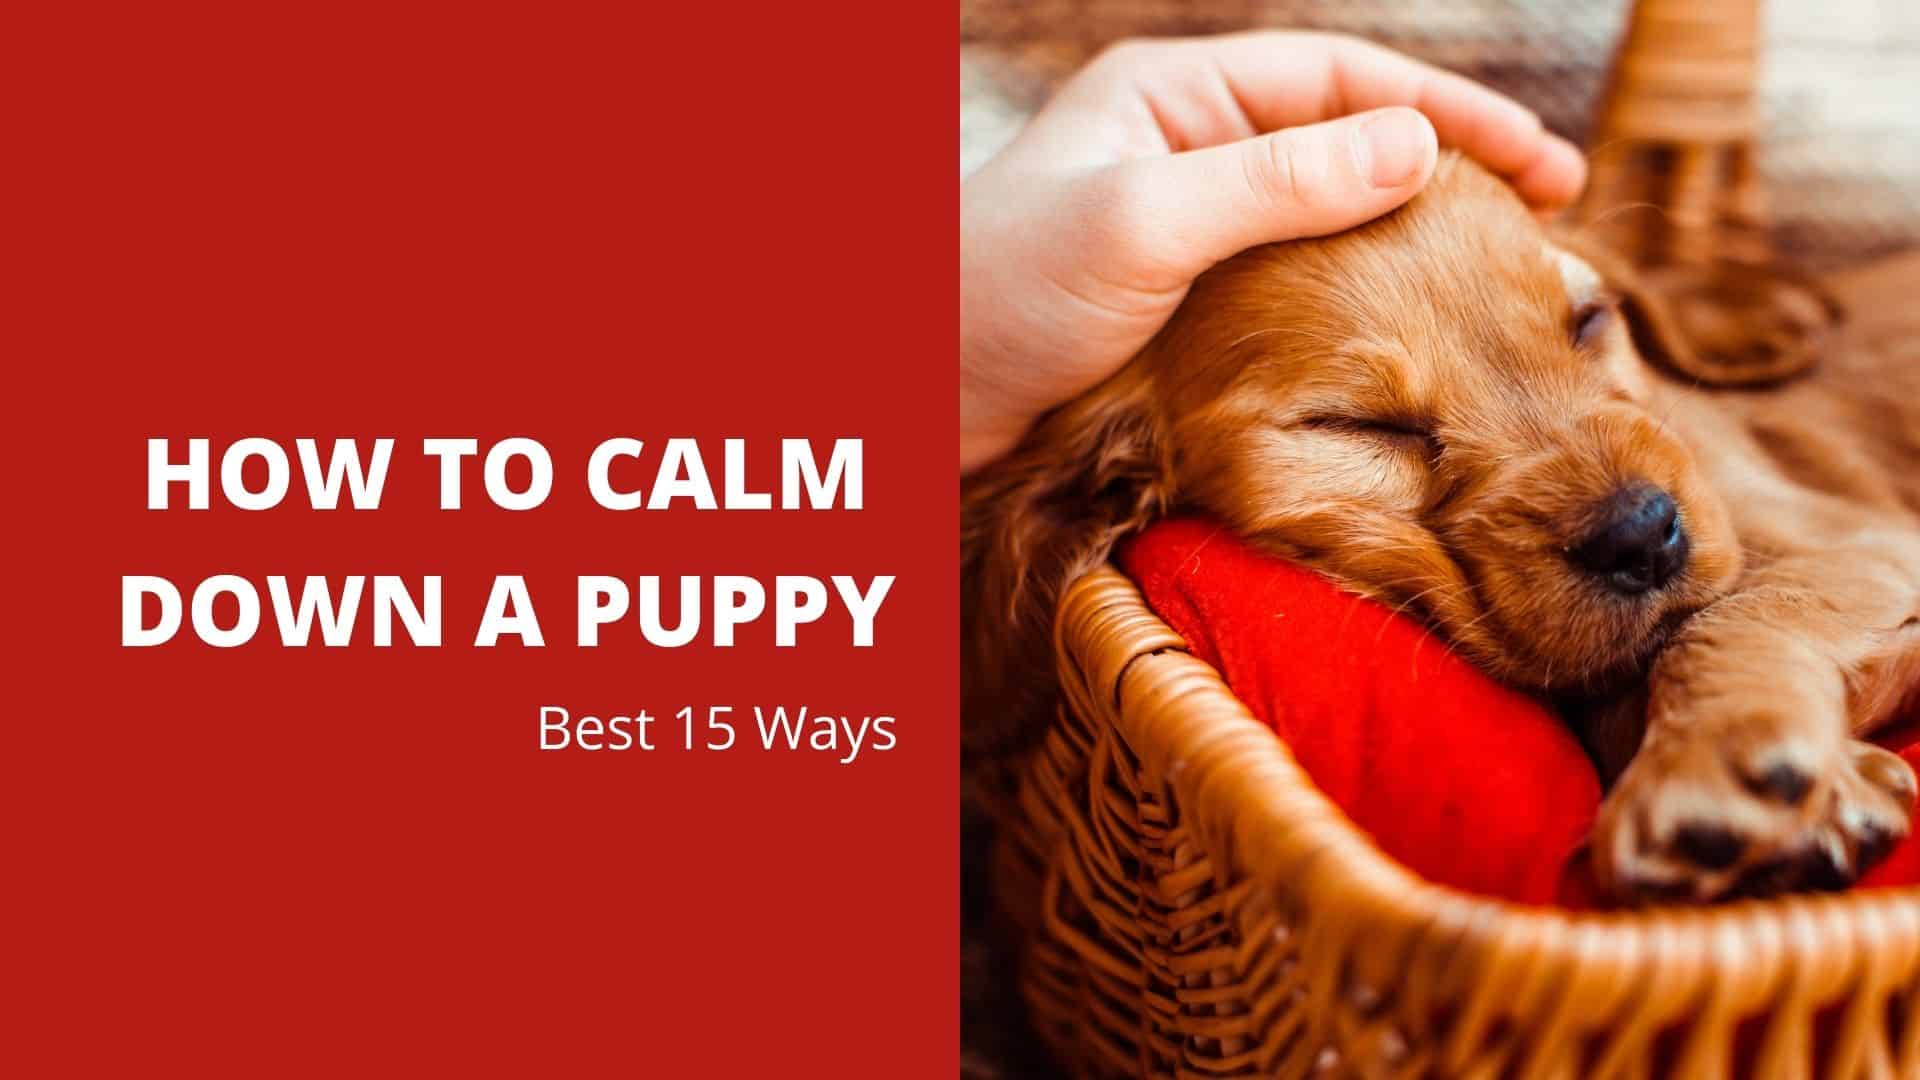 Best 15 Ways How to Calm Down a Puppy